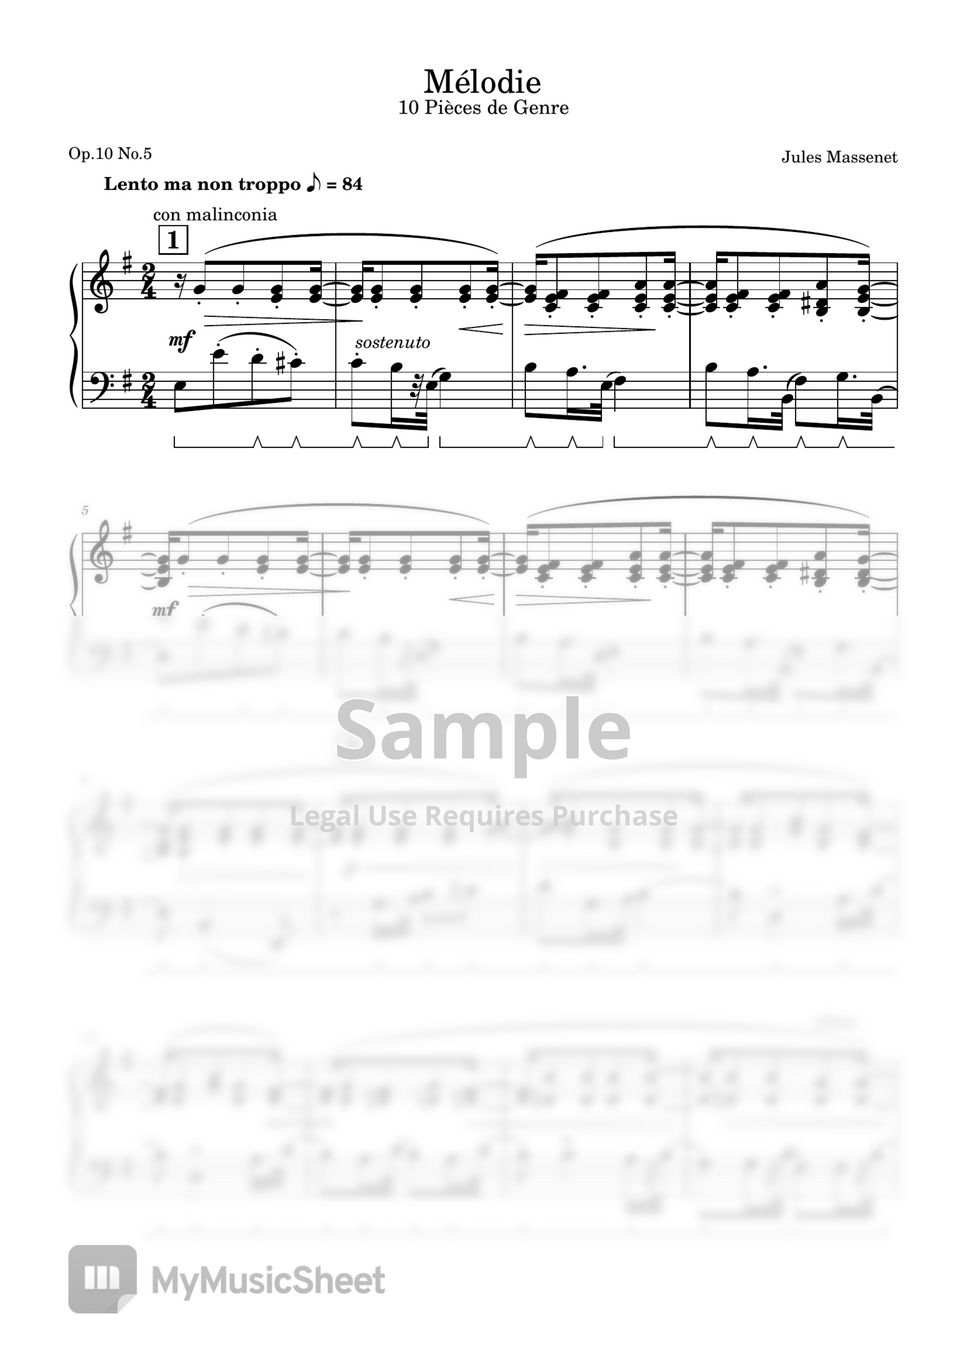 J. Massenet - Op10 No.5 Mélodie (Élégie) by Meuphonia